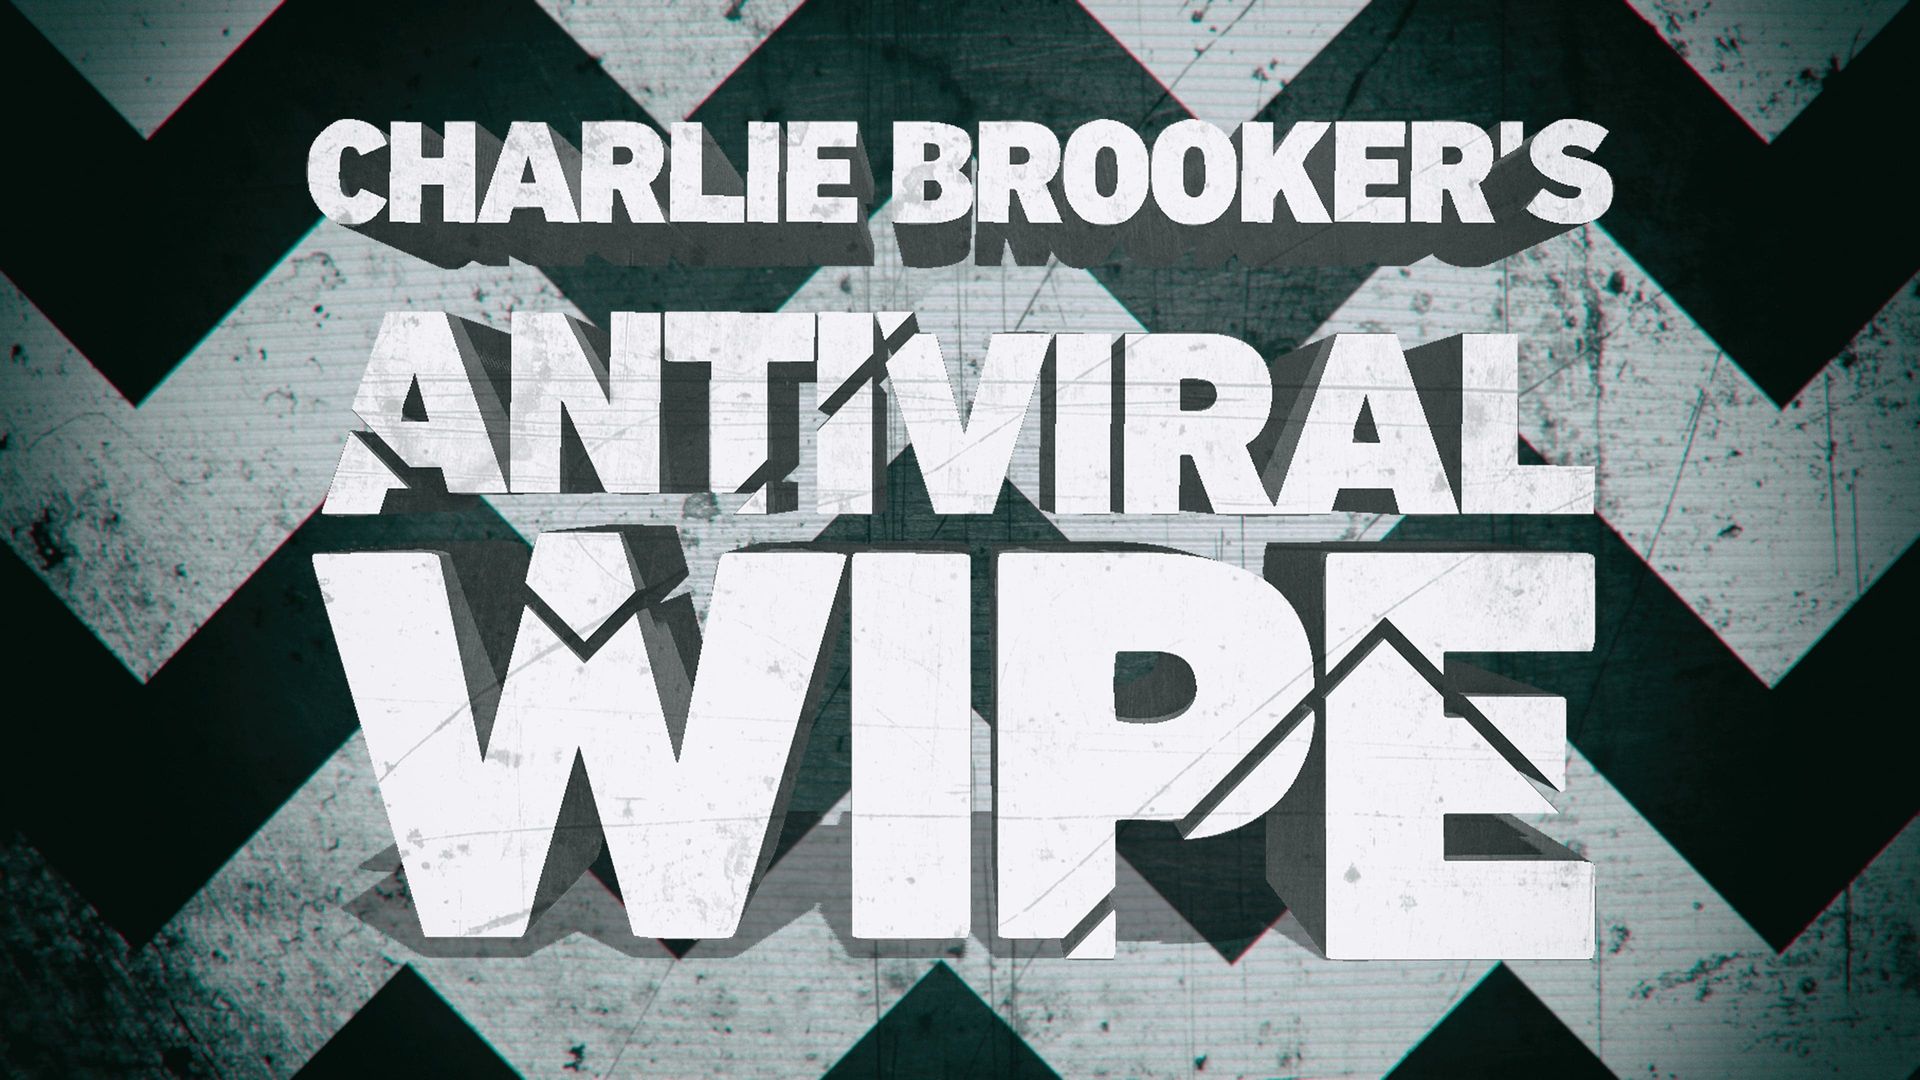 Charlie Brooker's Anti-Viral Wipe background